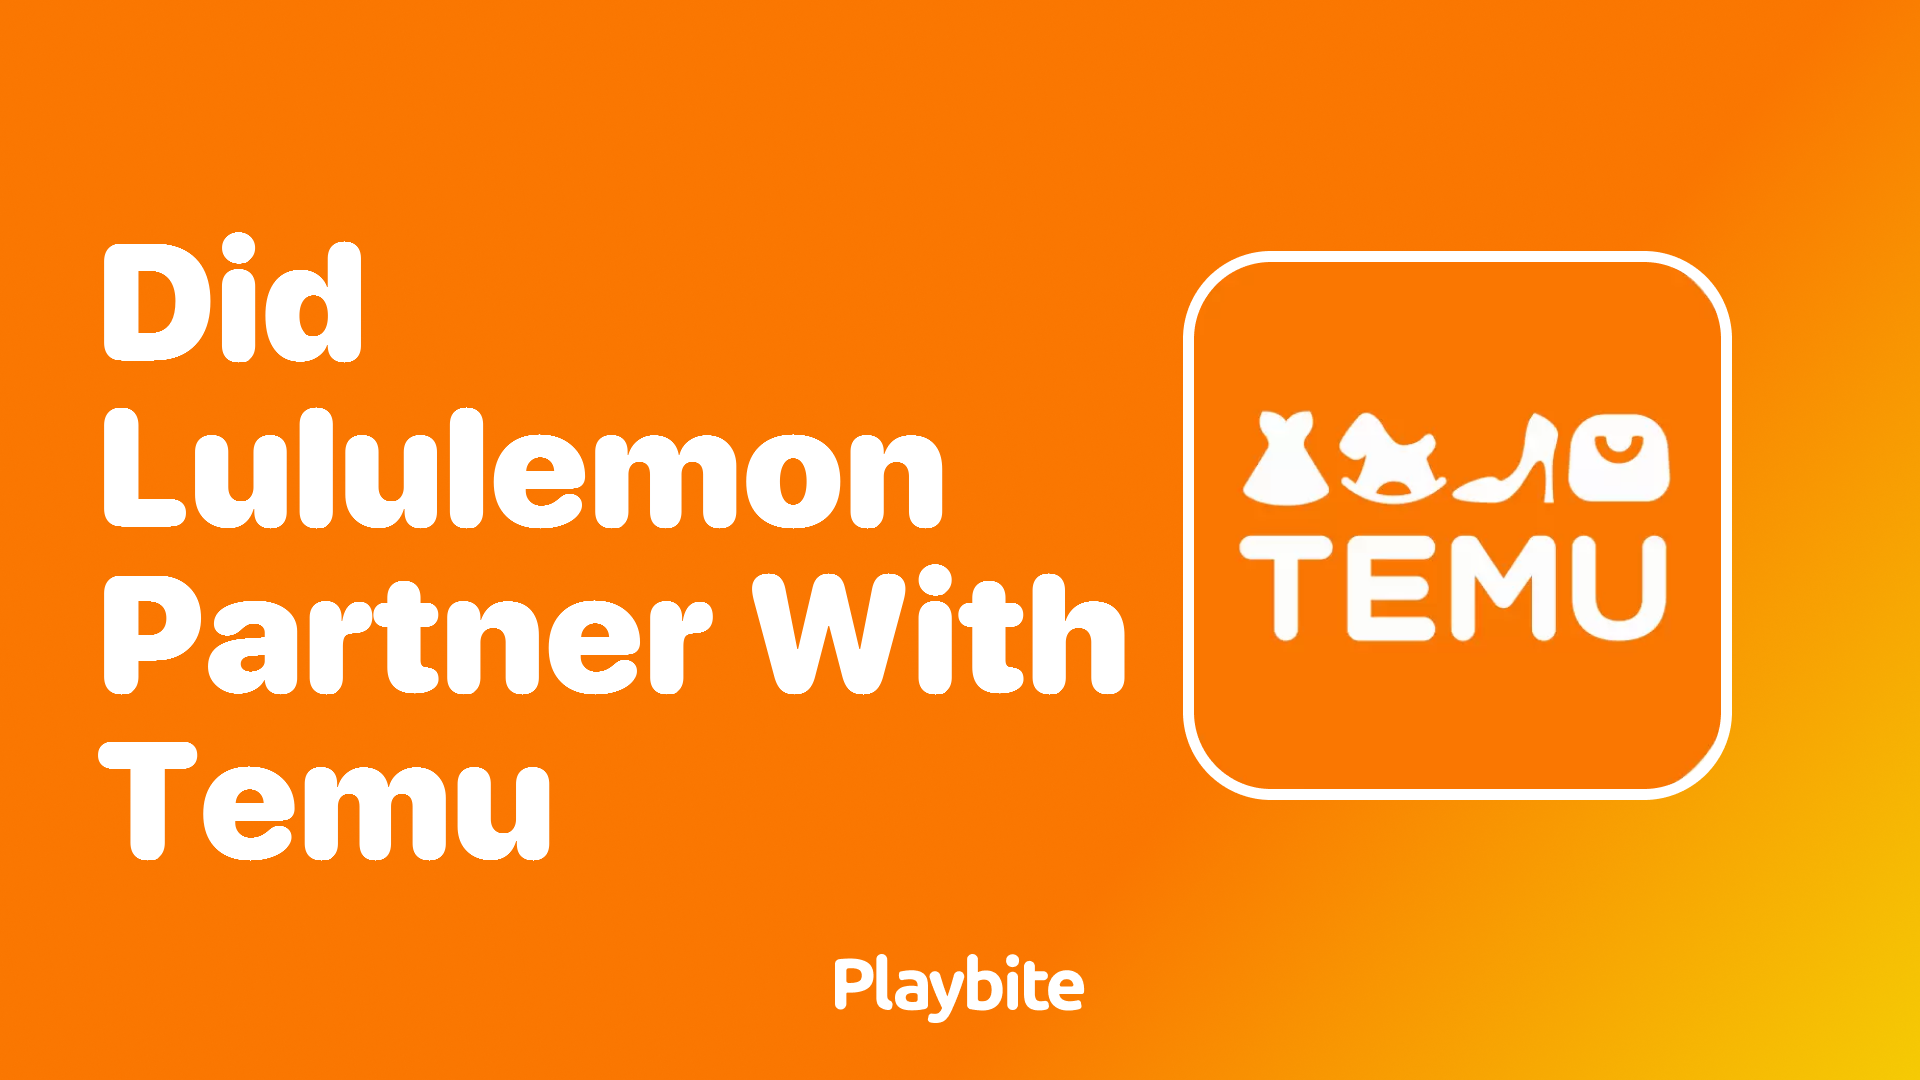 Did Lululemon Partner with Temu? - Playbite